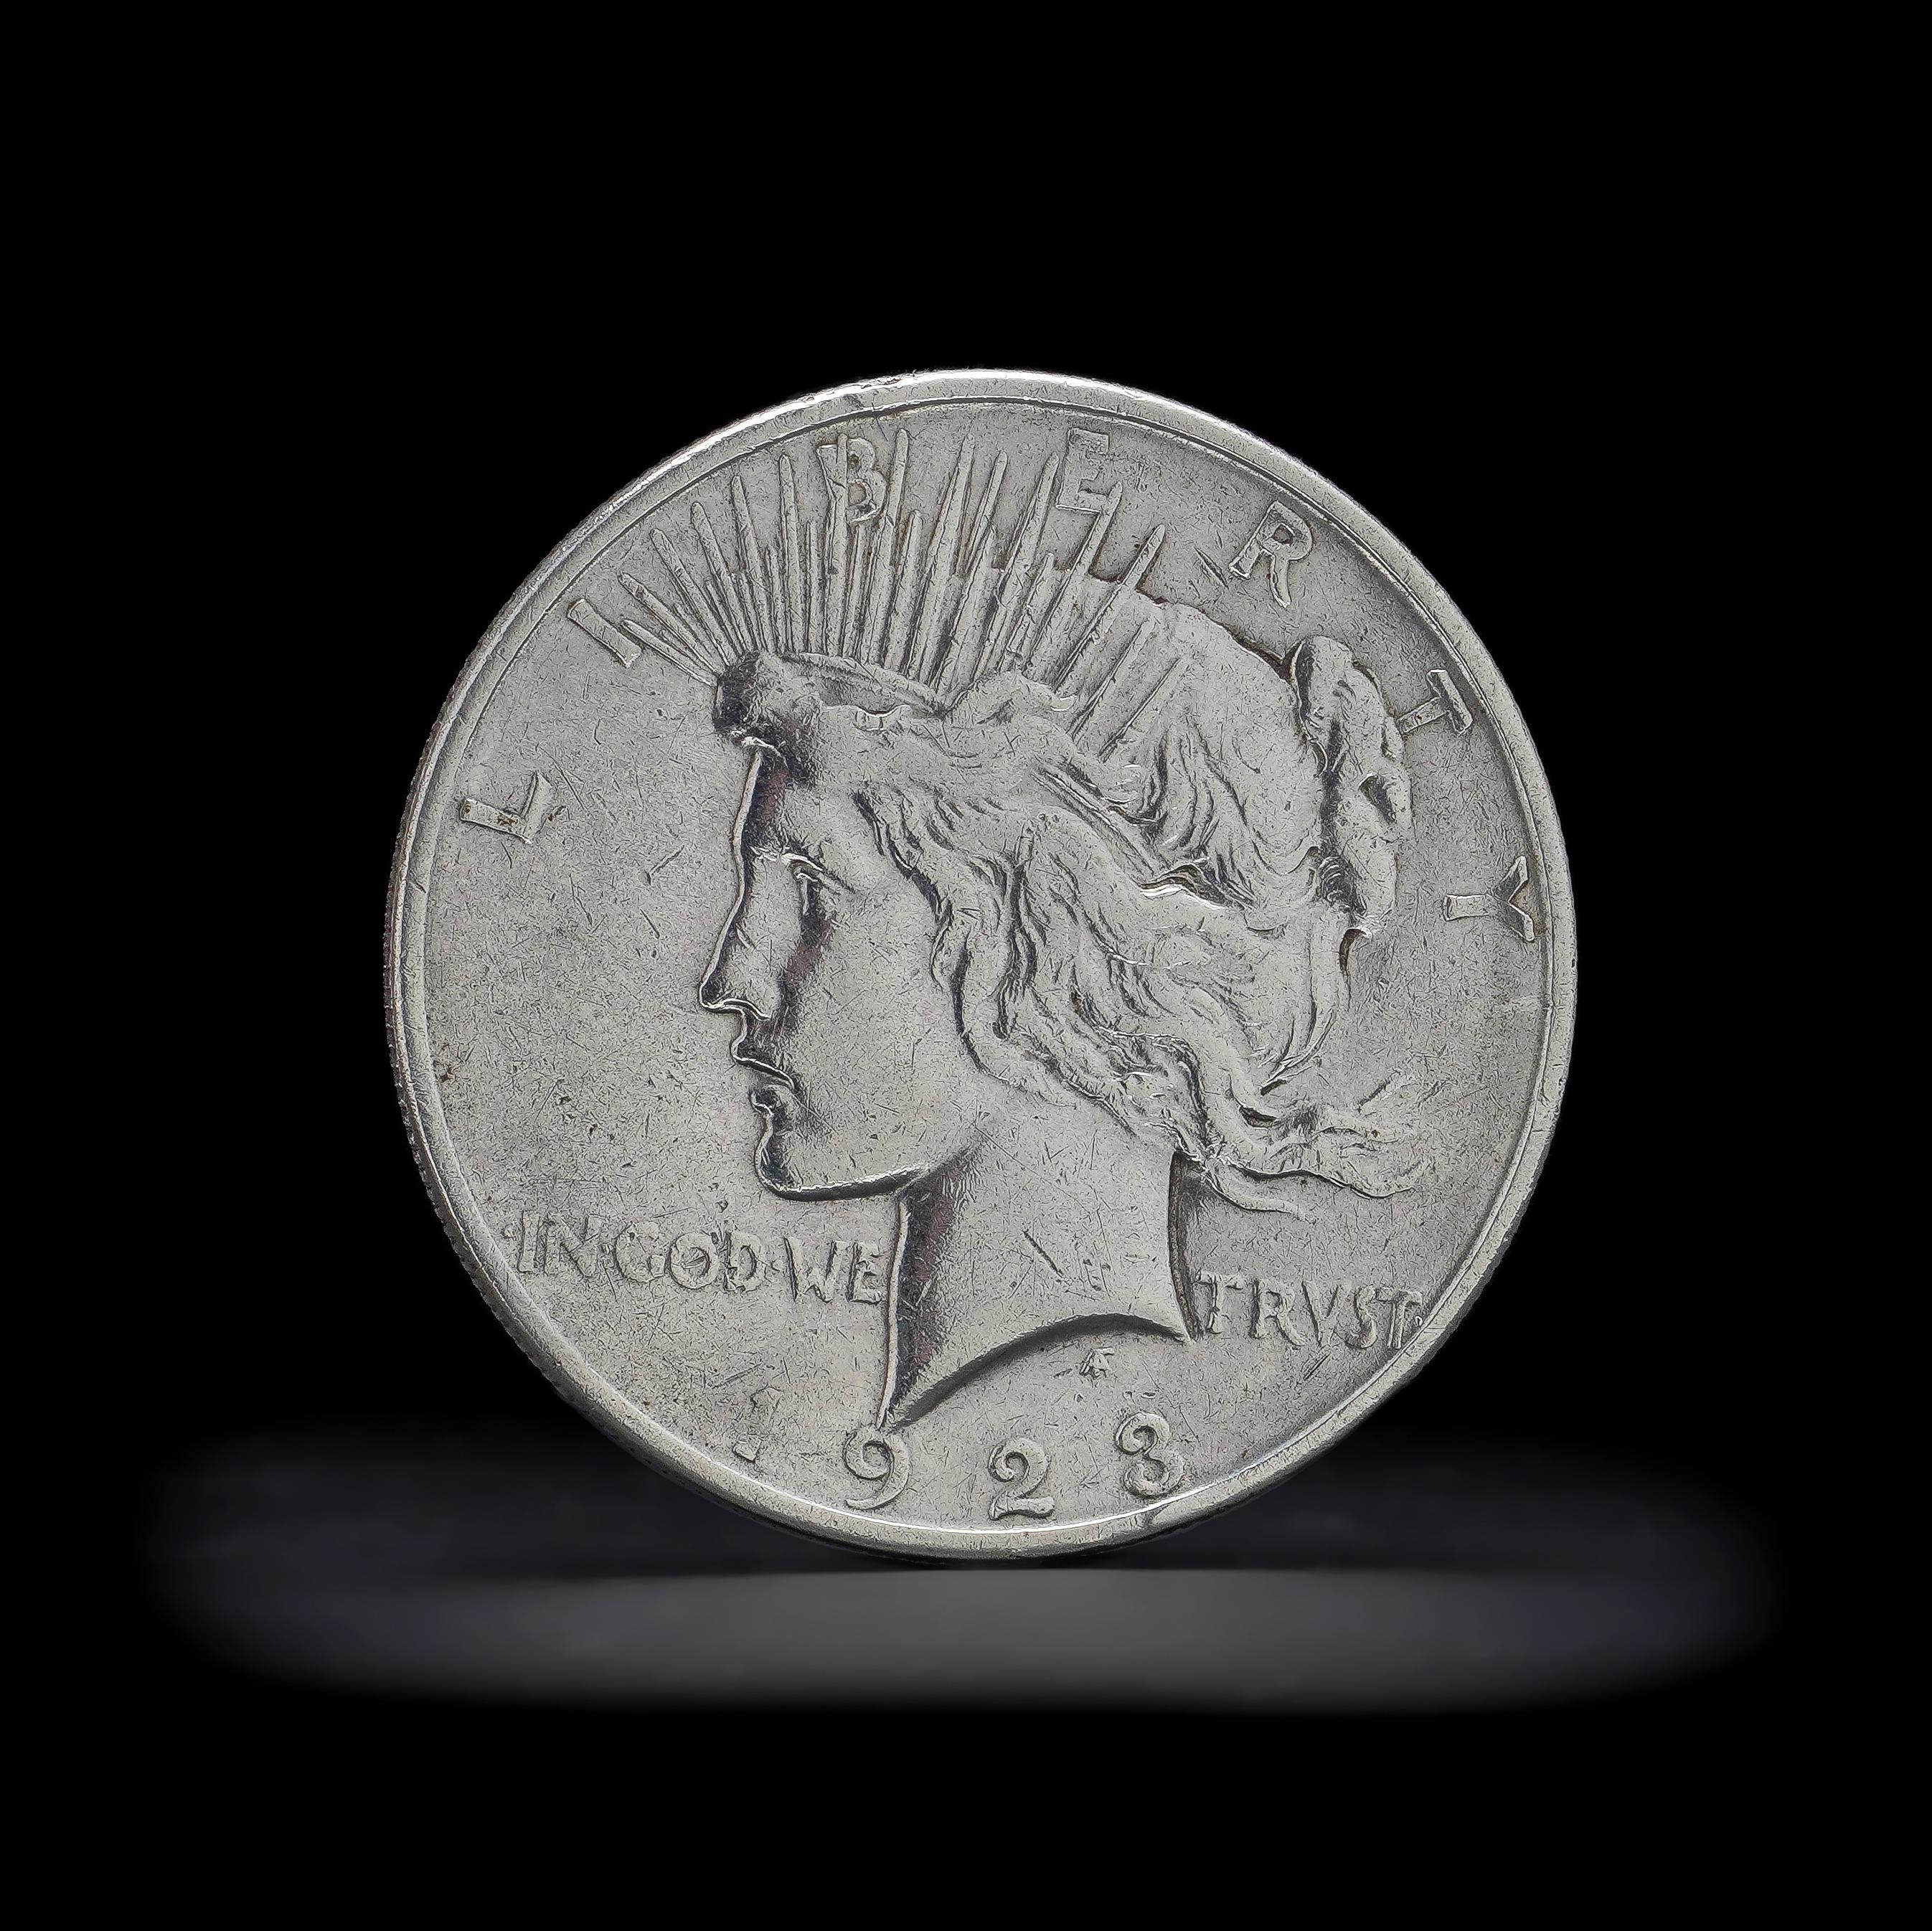 1923 silver dollar in god we trvst